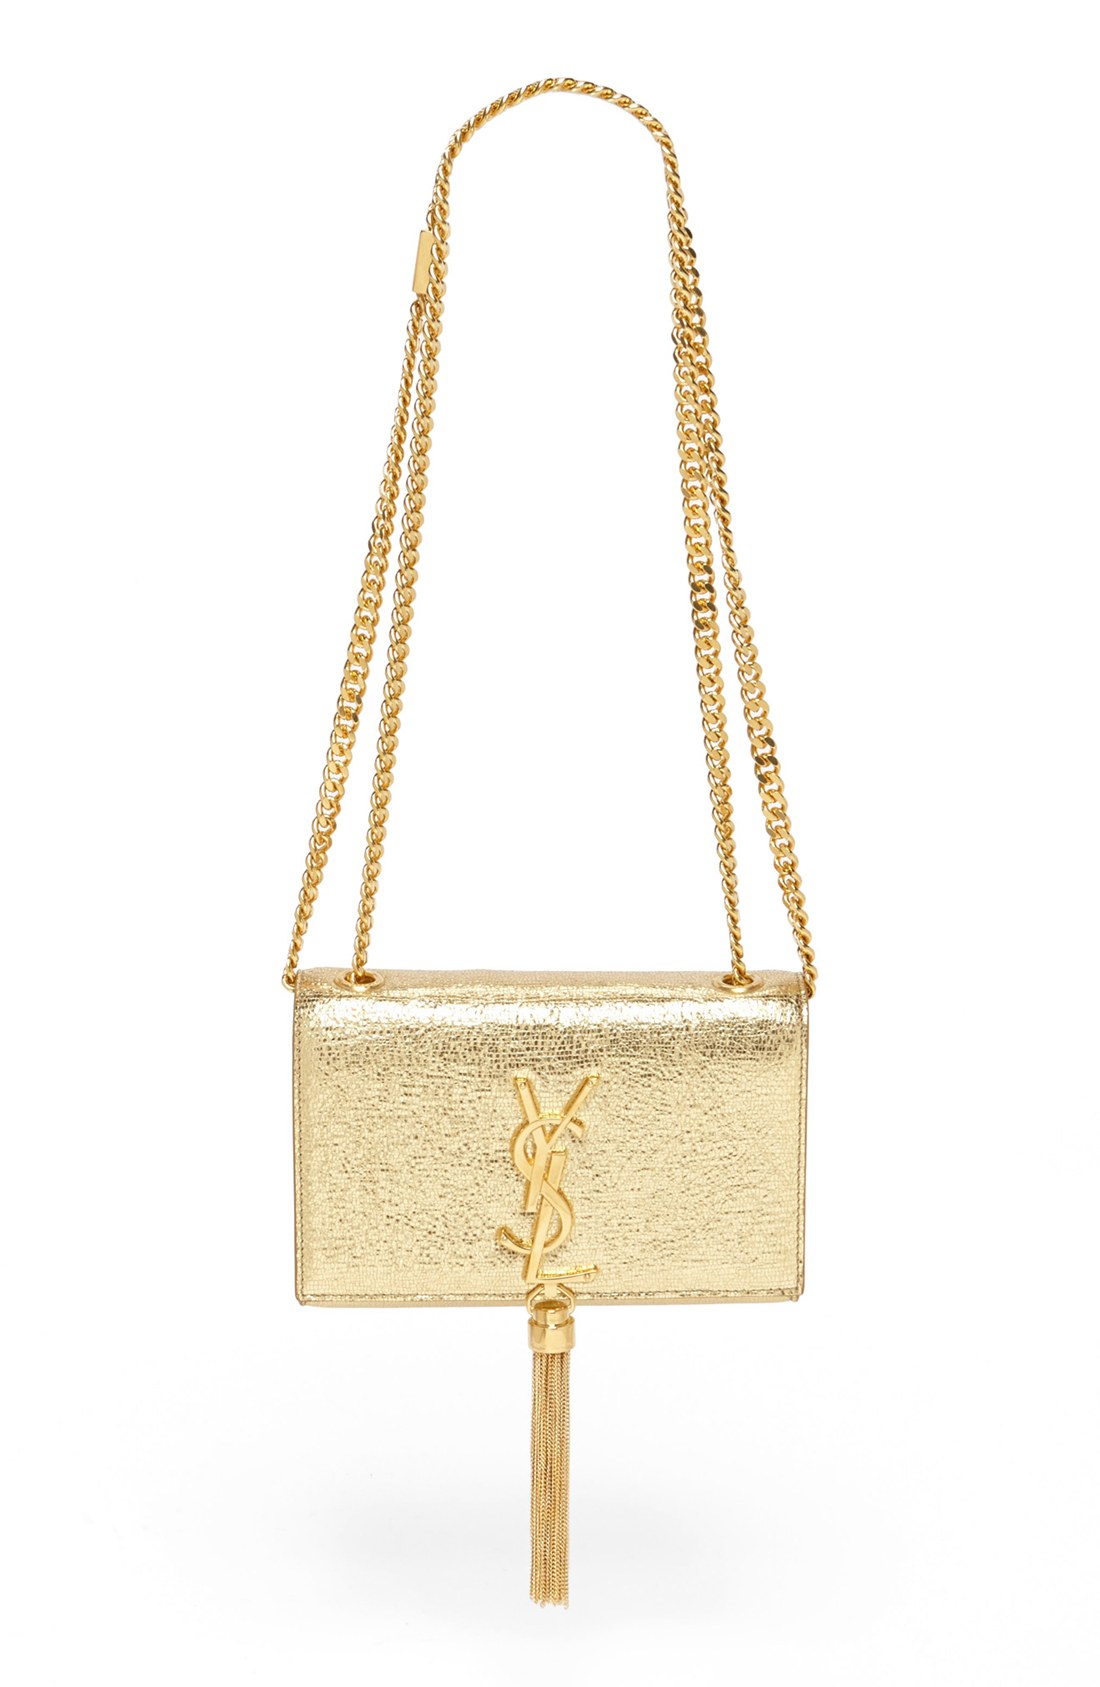 Saint Laurent Cassandre Small Metallic Leather Crossbody Bag in Gold (Oro) | Lyst